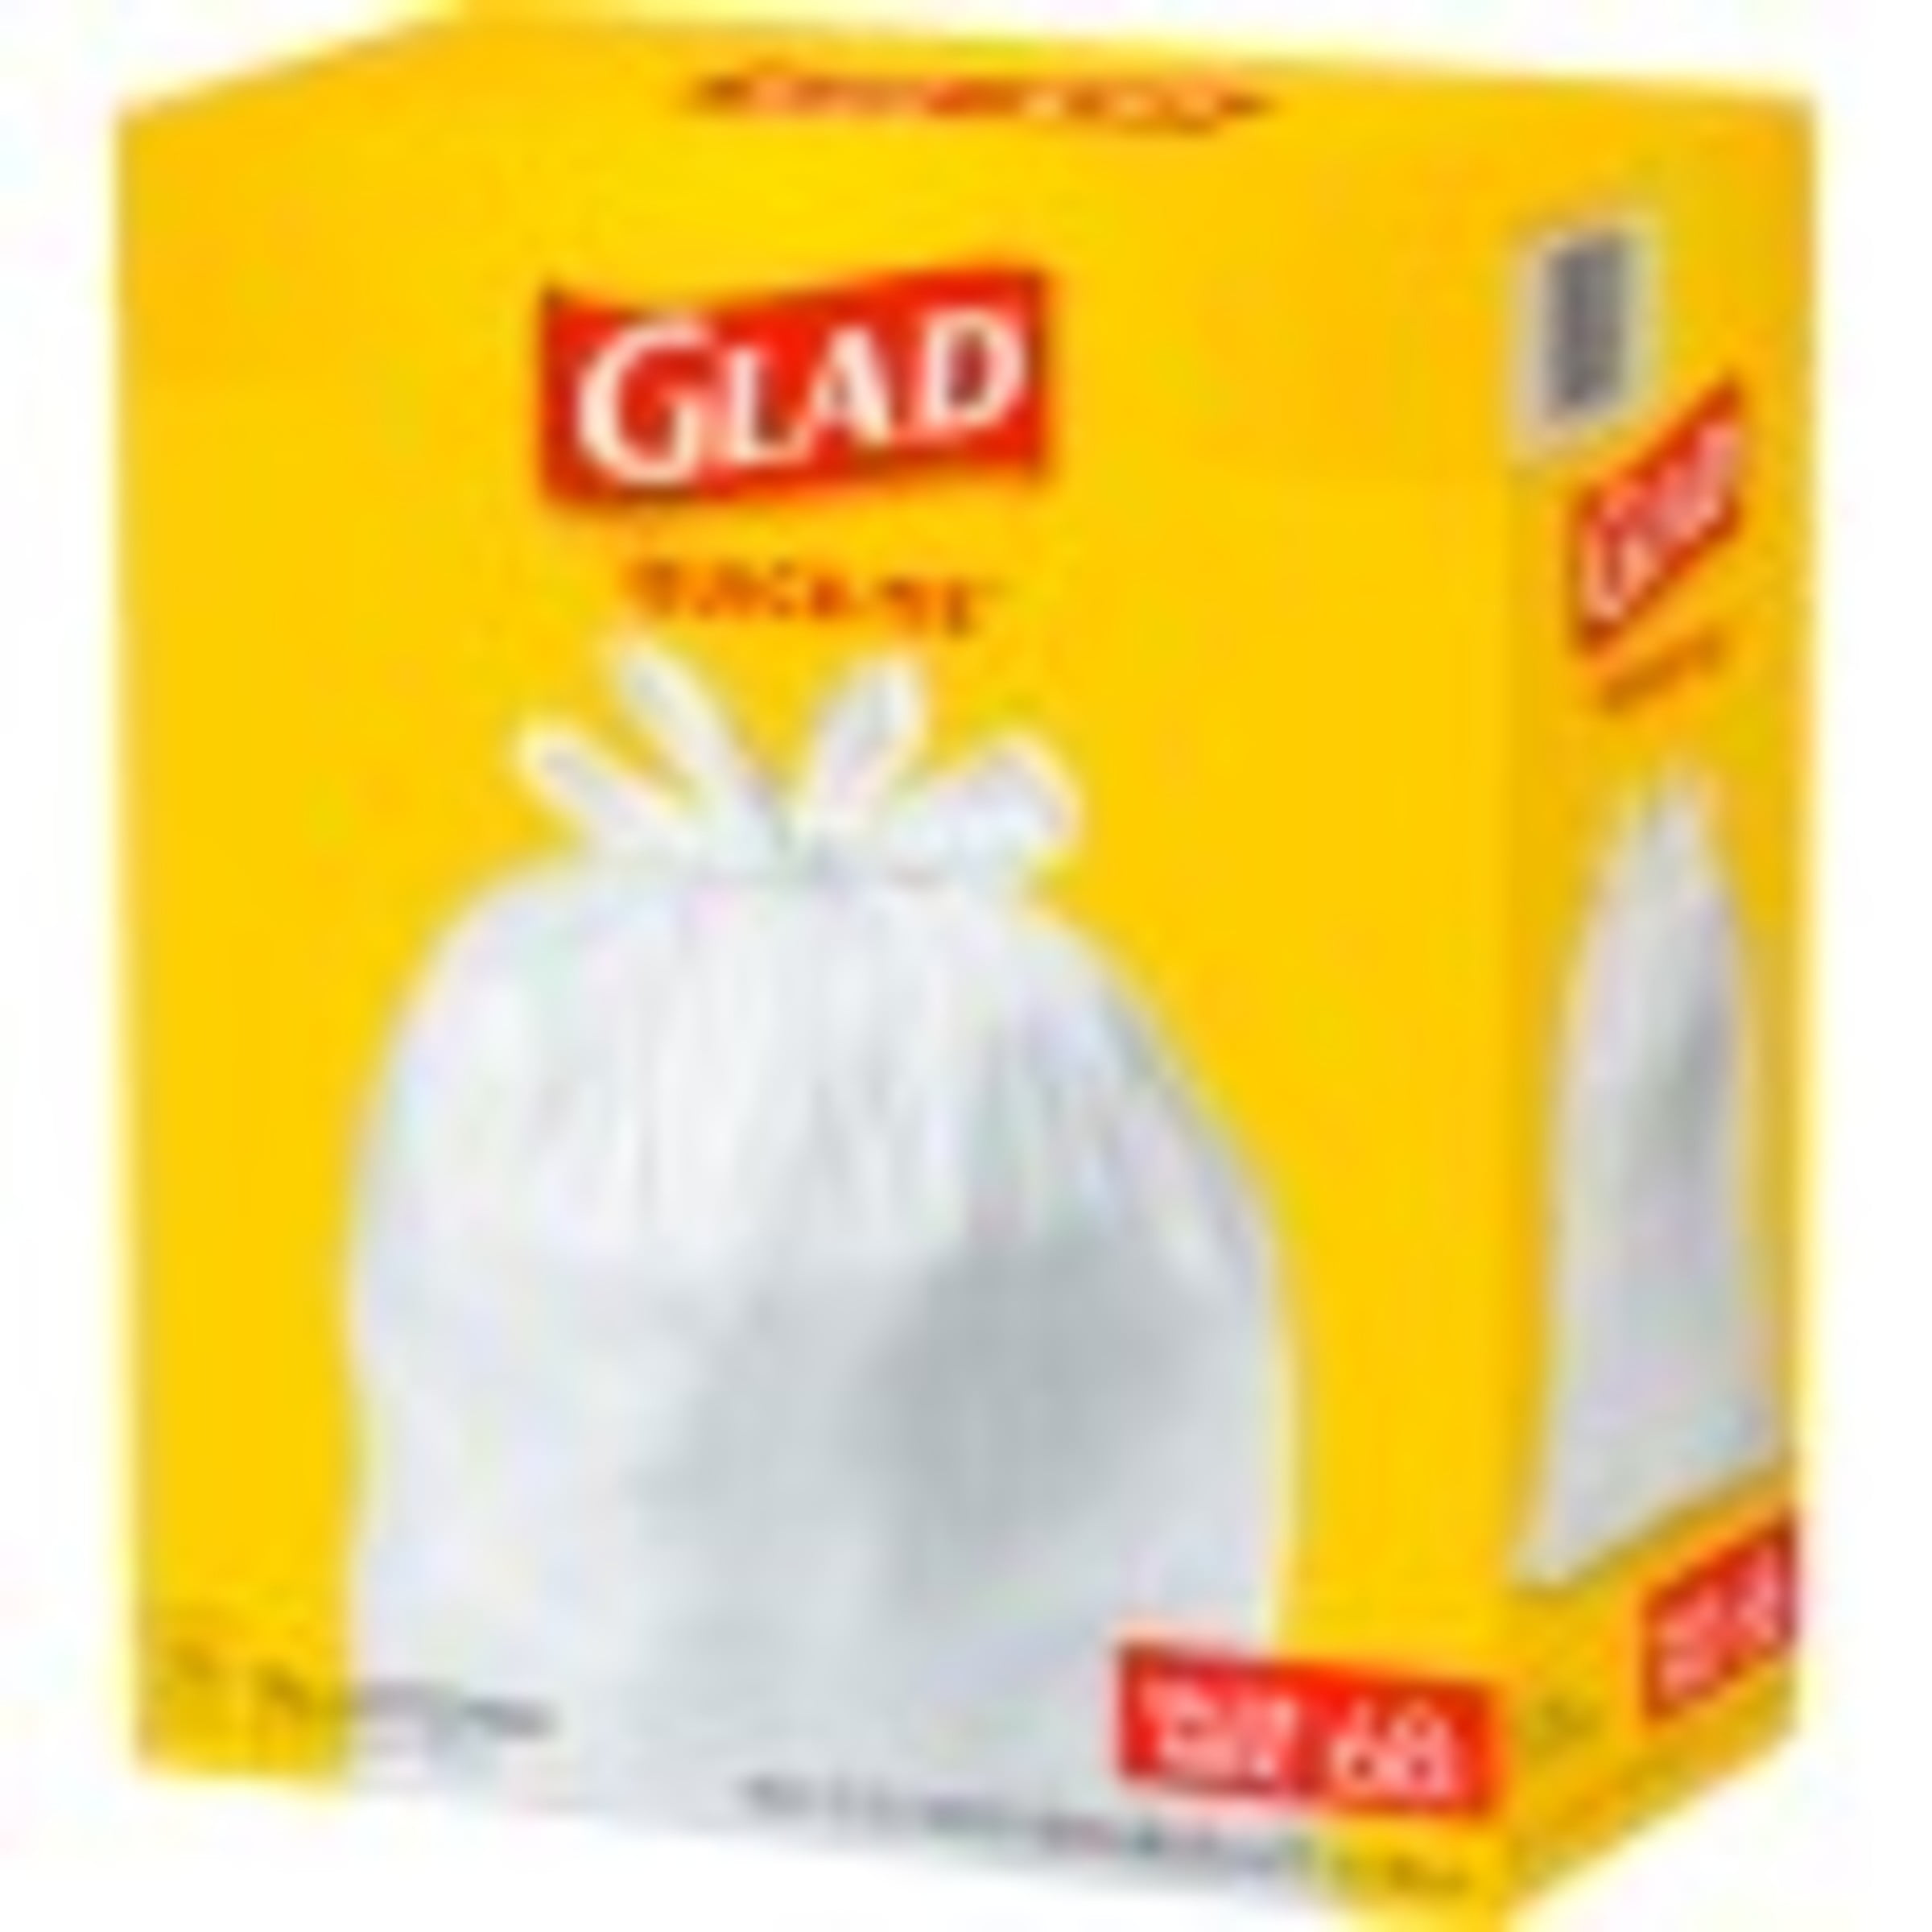 Glad Quick-Tie Tall Kitchen Trash Bags, White, 13 Gallon, 272 Tall Trash  bags